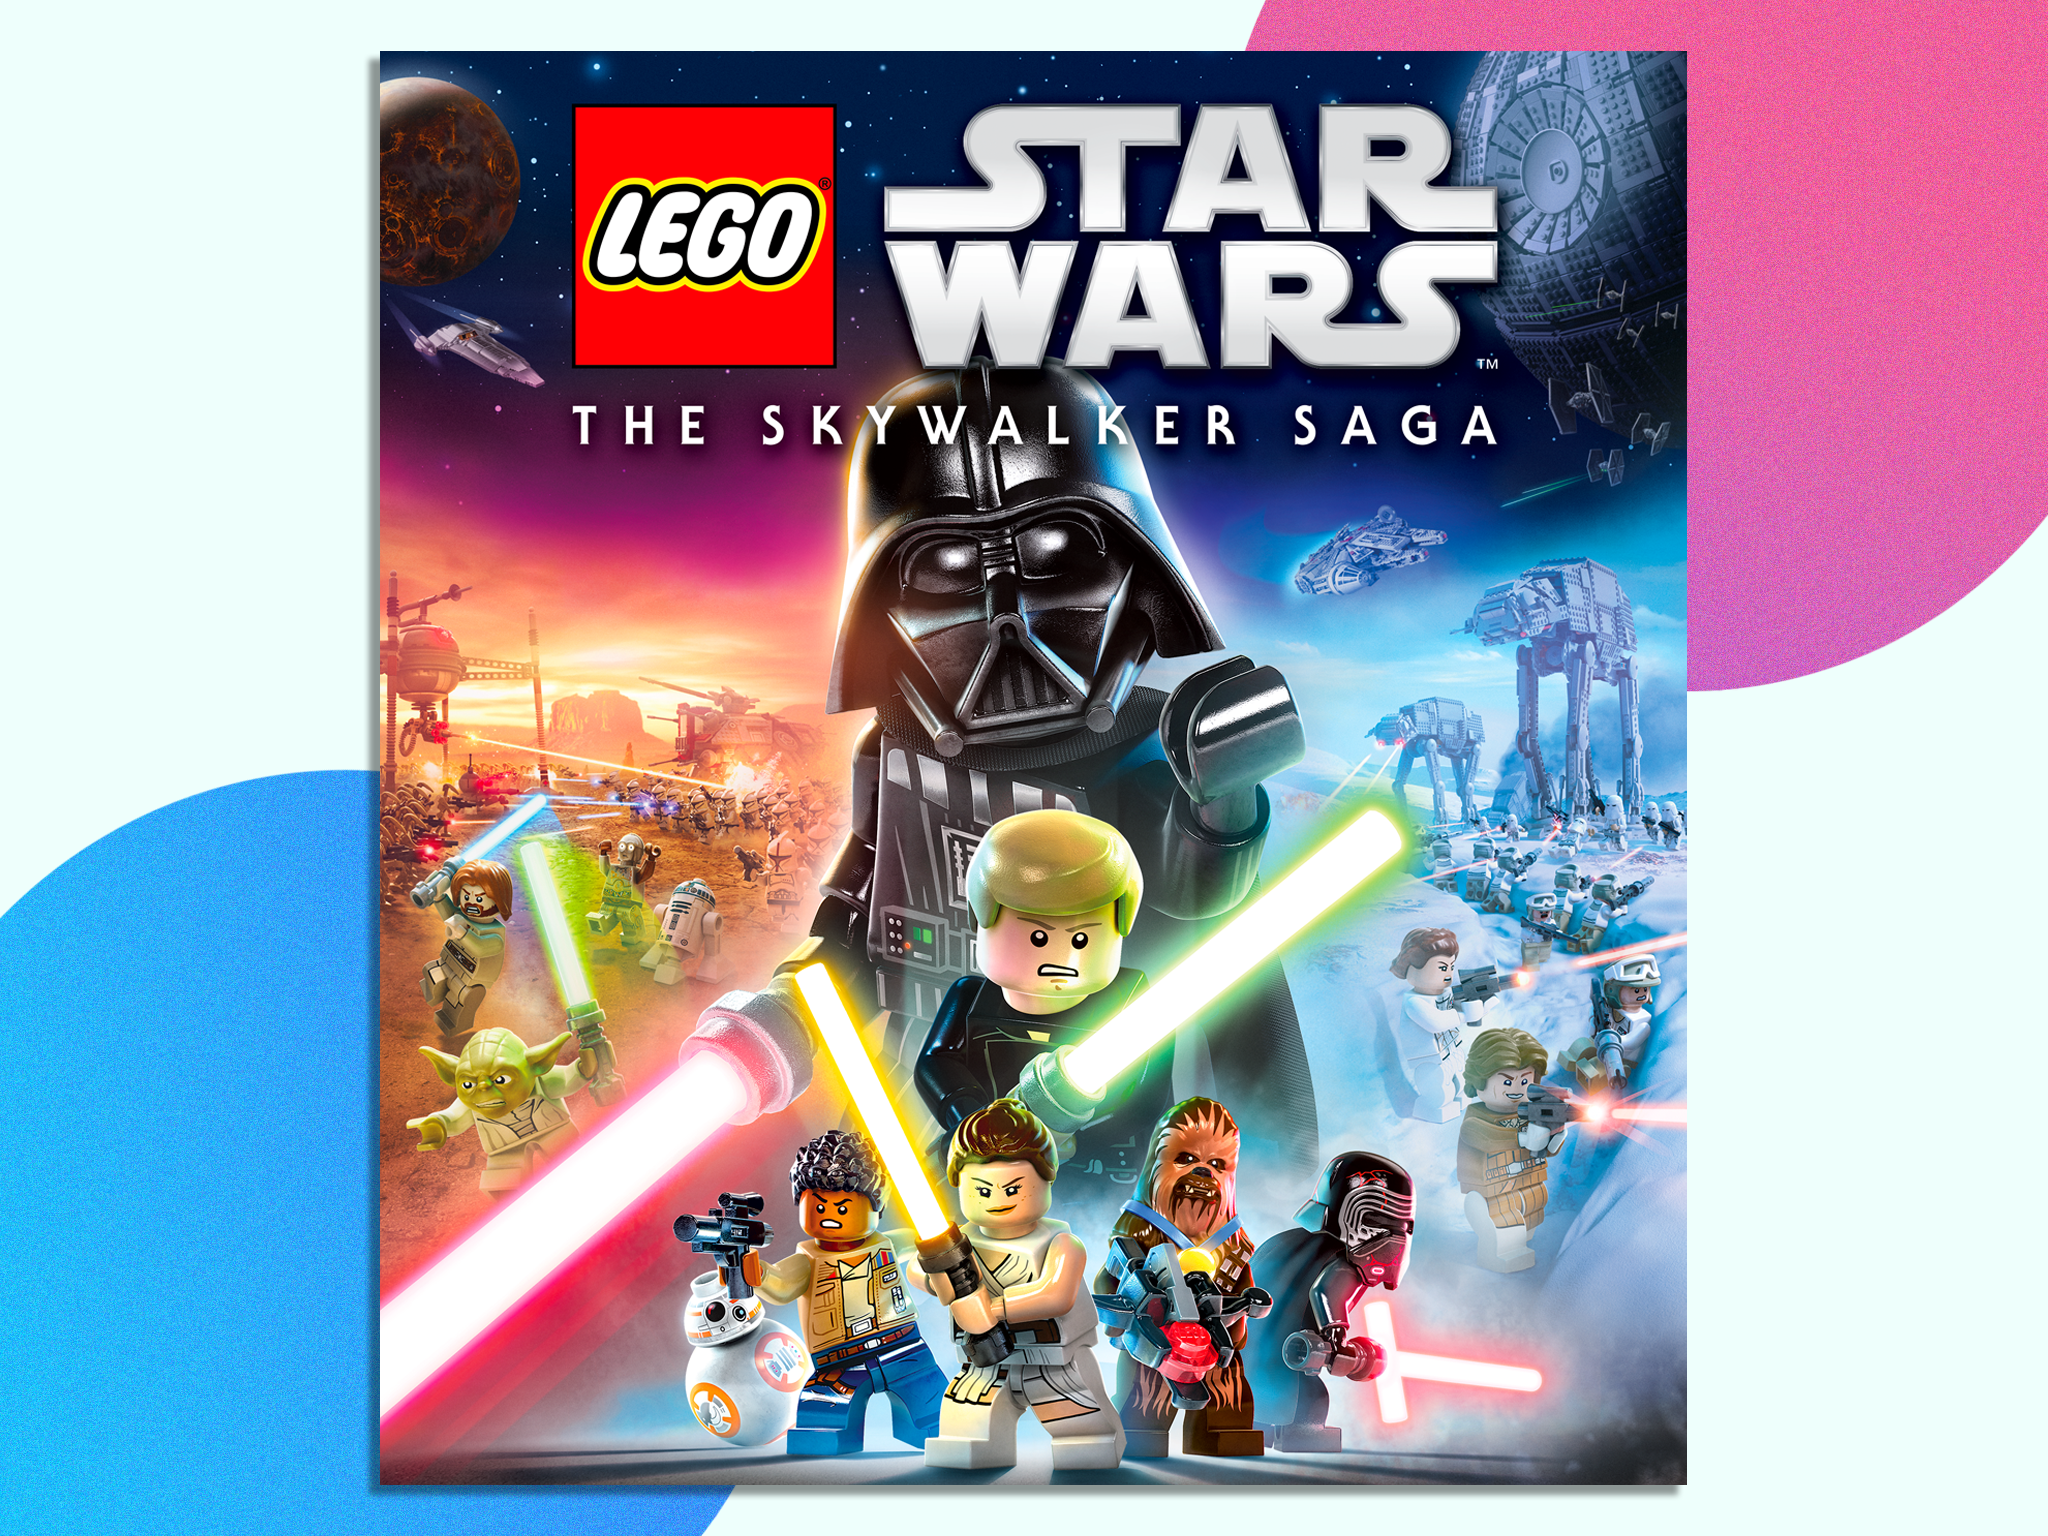 Lego Star Wars: The Skywalker Saga review: Blockbuster action in the biggest brick-based game yet